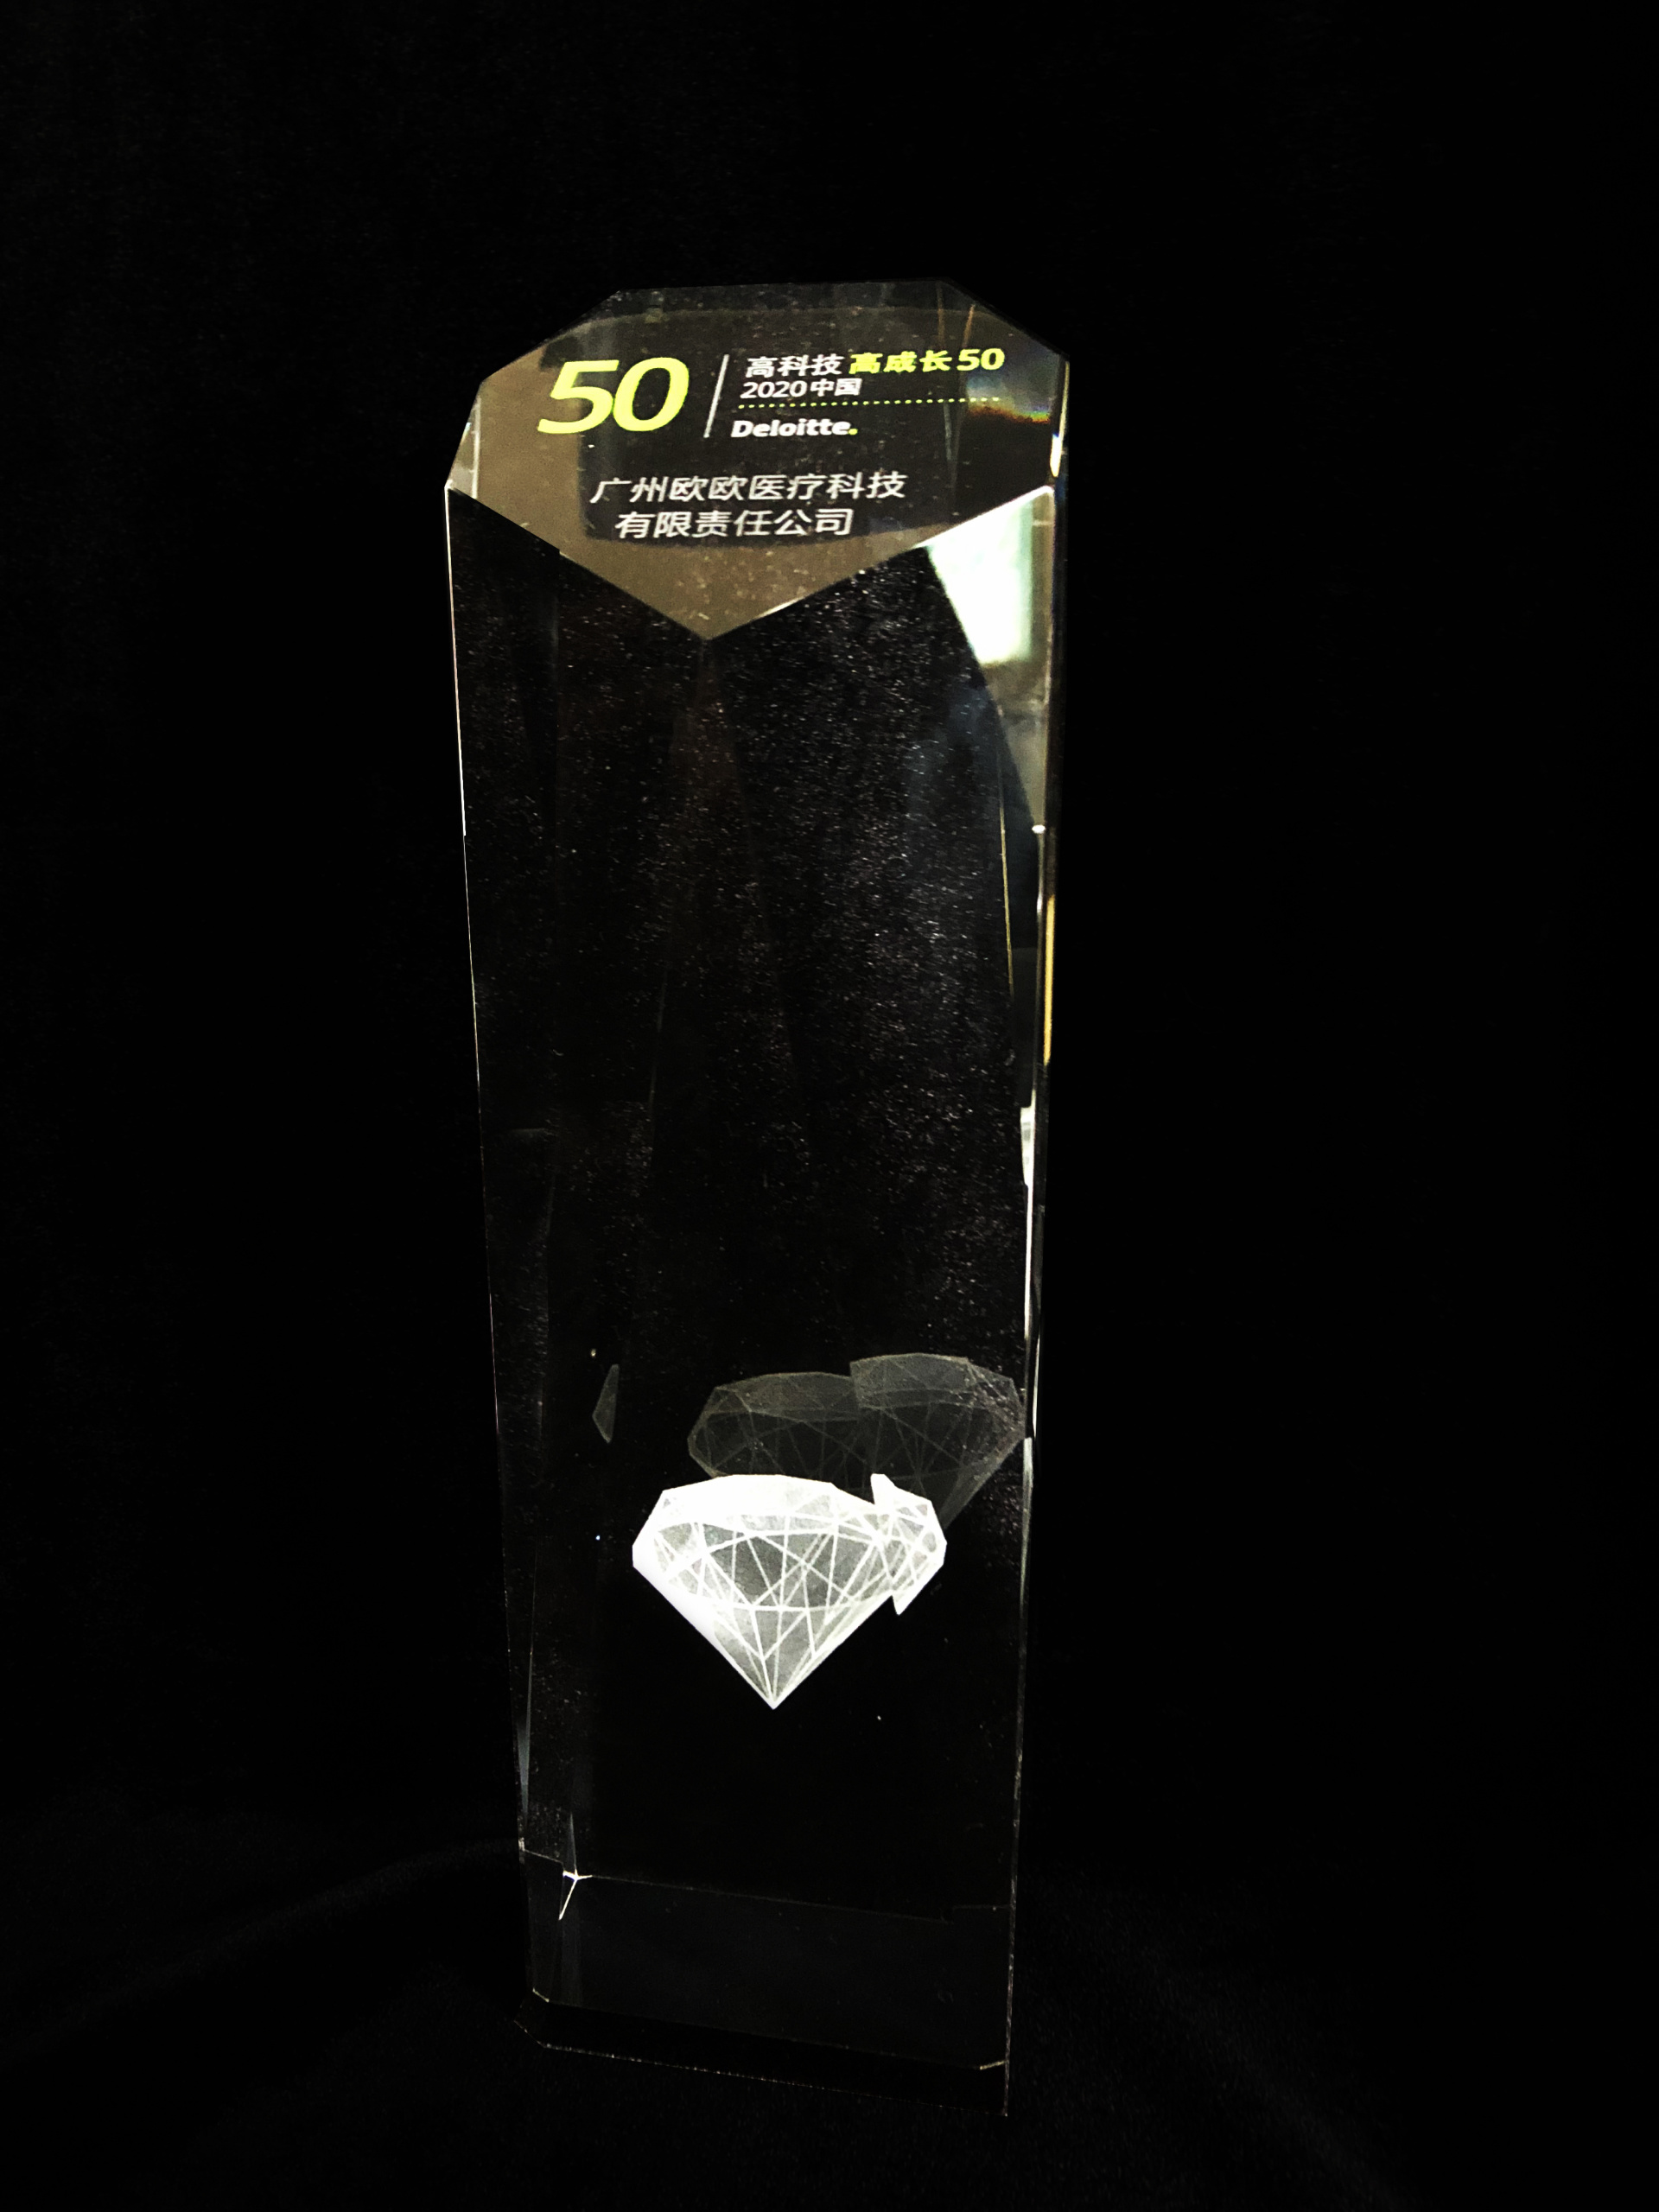 China Tech Fast 50 Award by Deloitte